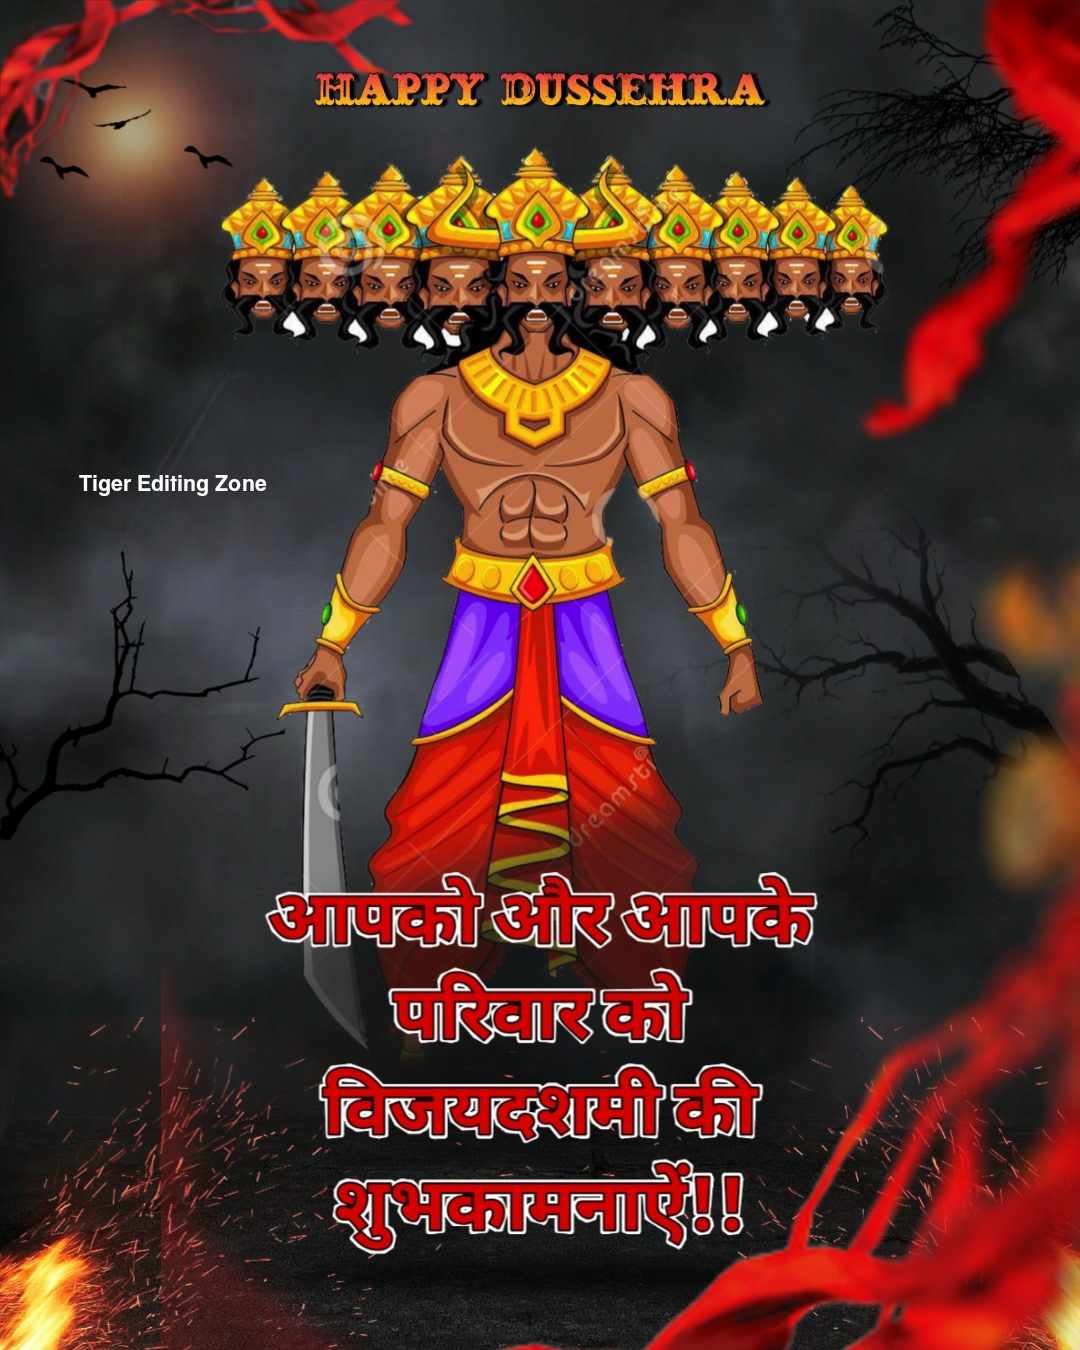 Vijayadashami ki hardik shubhkamnaye Banner image Hd